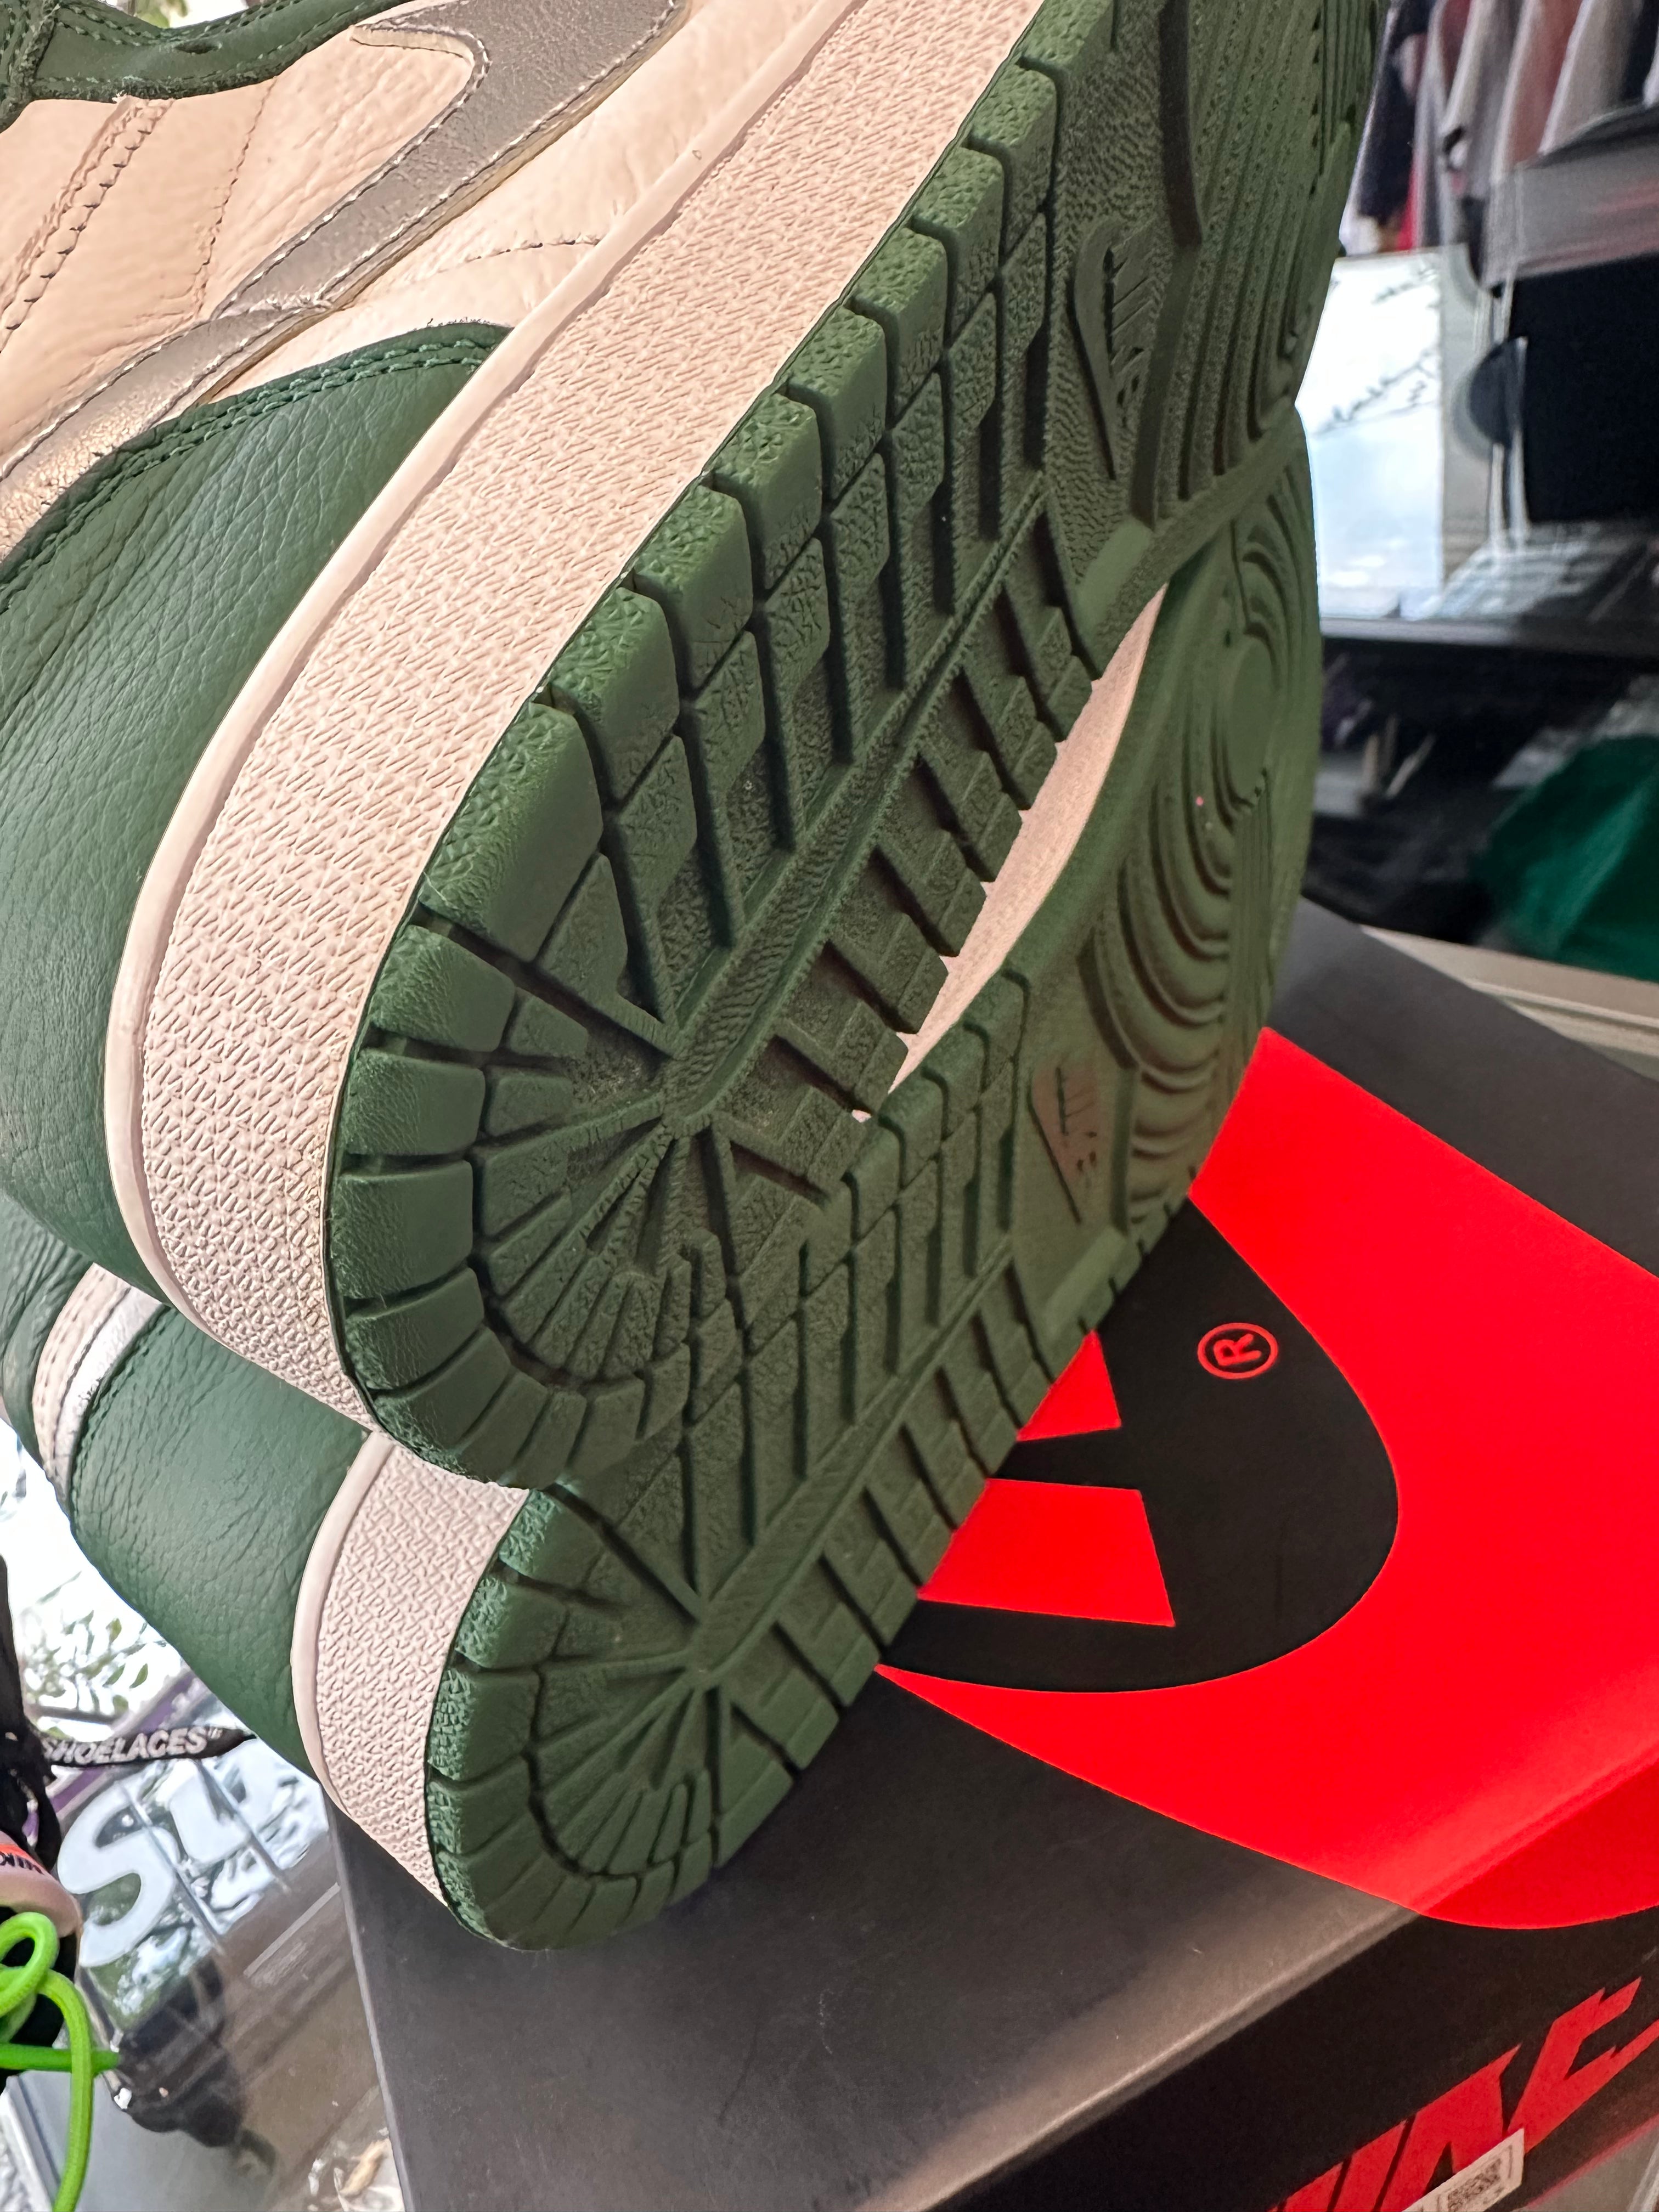 Air Jordan 1 High “Gorge Green” Size 9.5